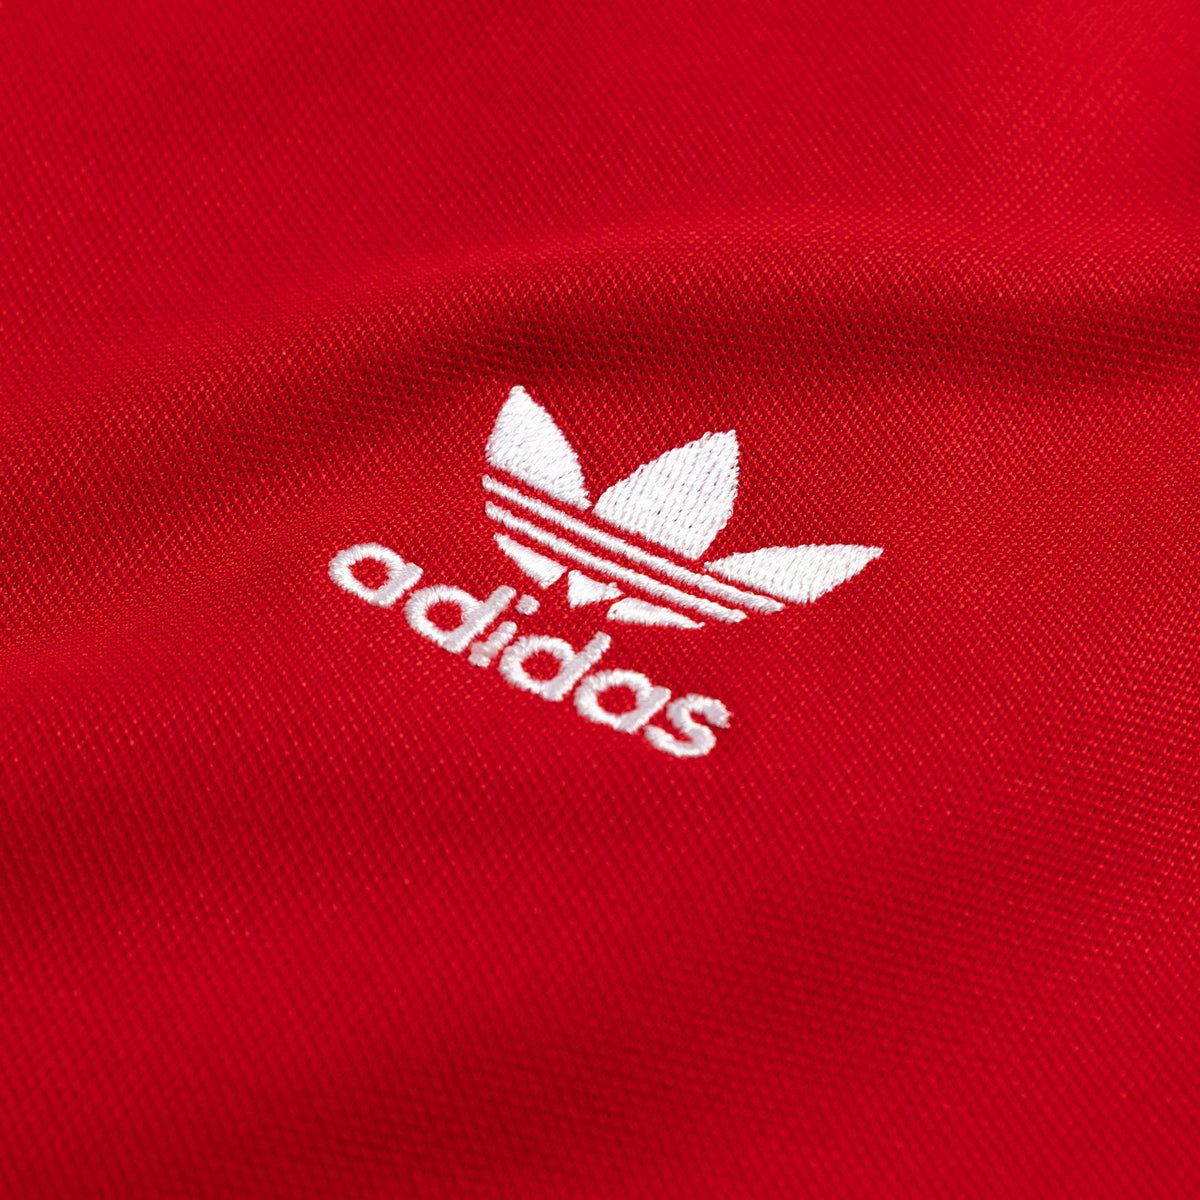 Adidas Adicolor Beckenbauer Originals Jacke – buy now at Asphaltgold Online  Store!